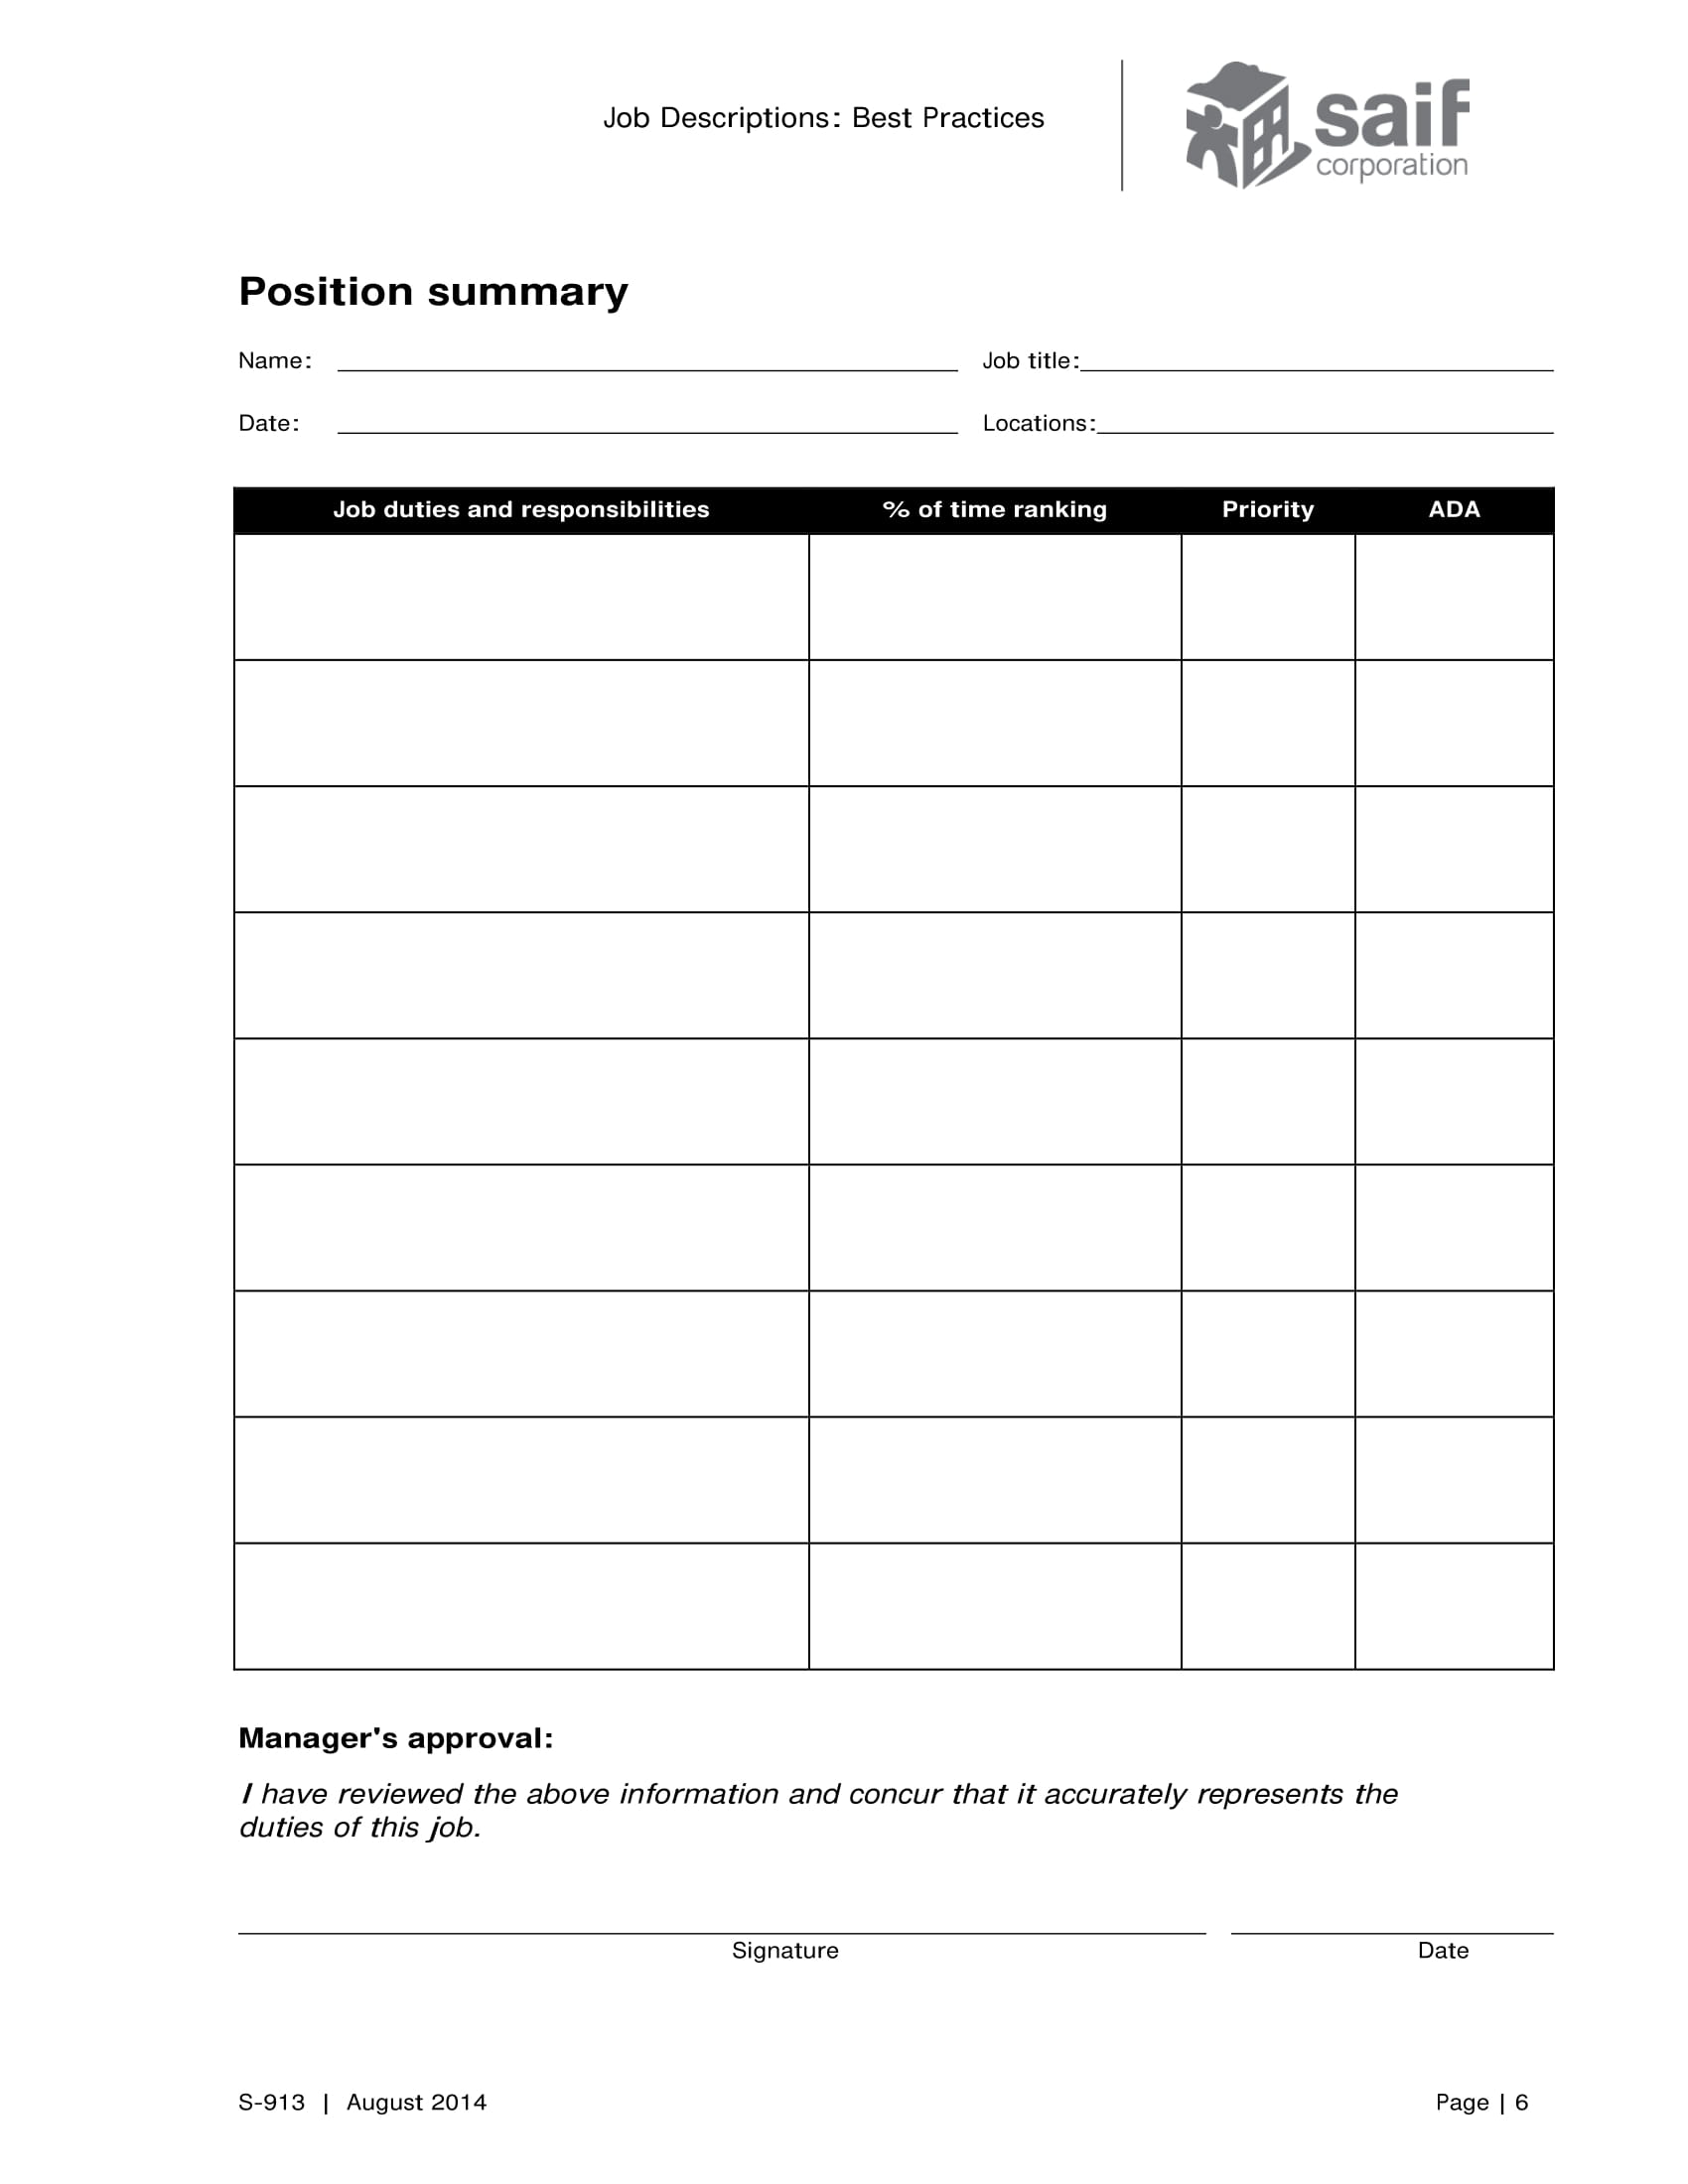 job position summary format example